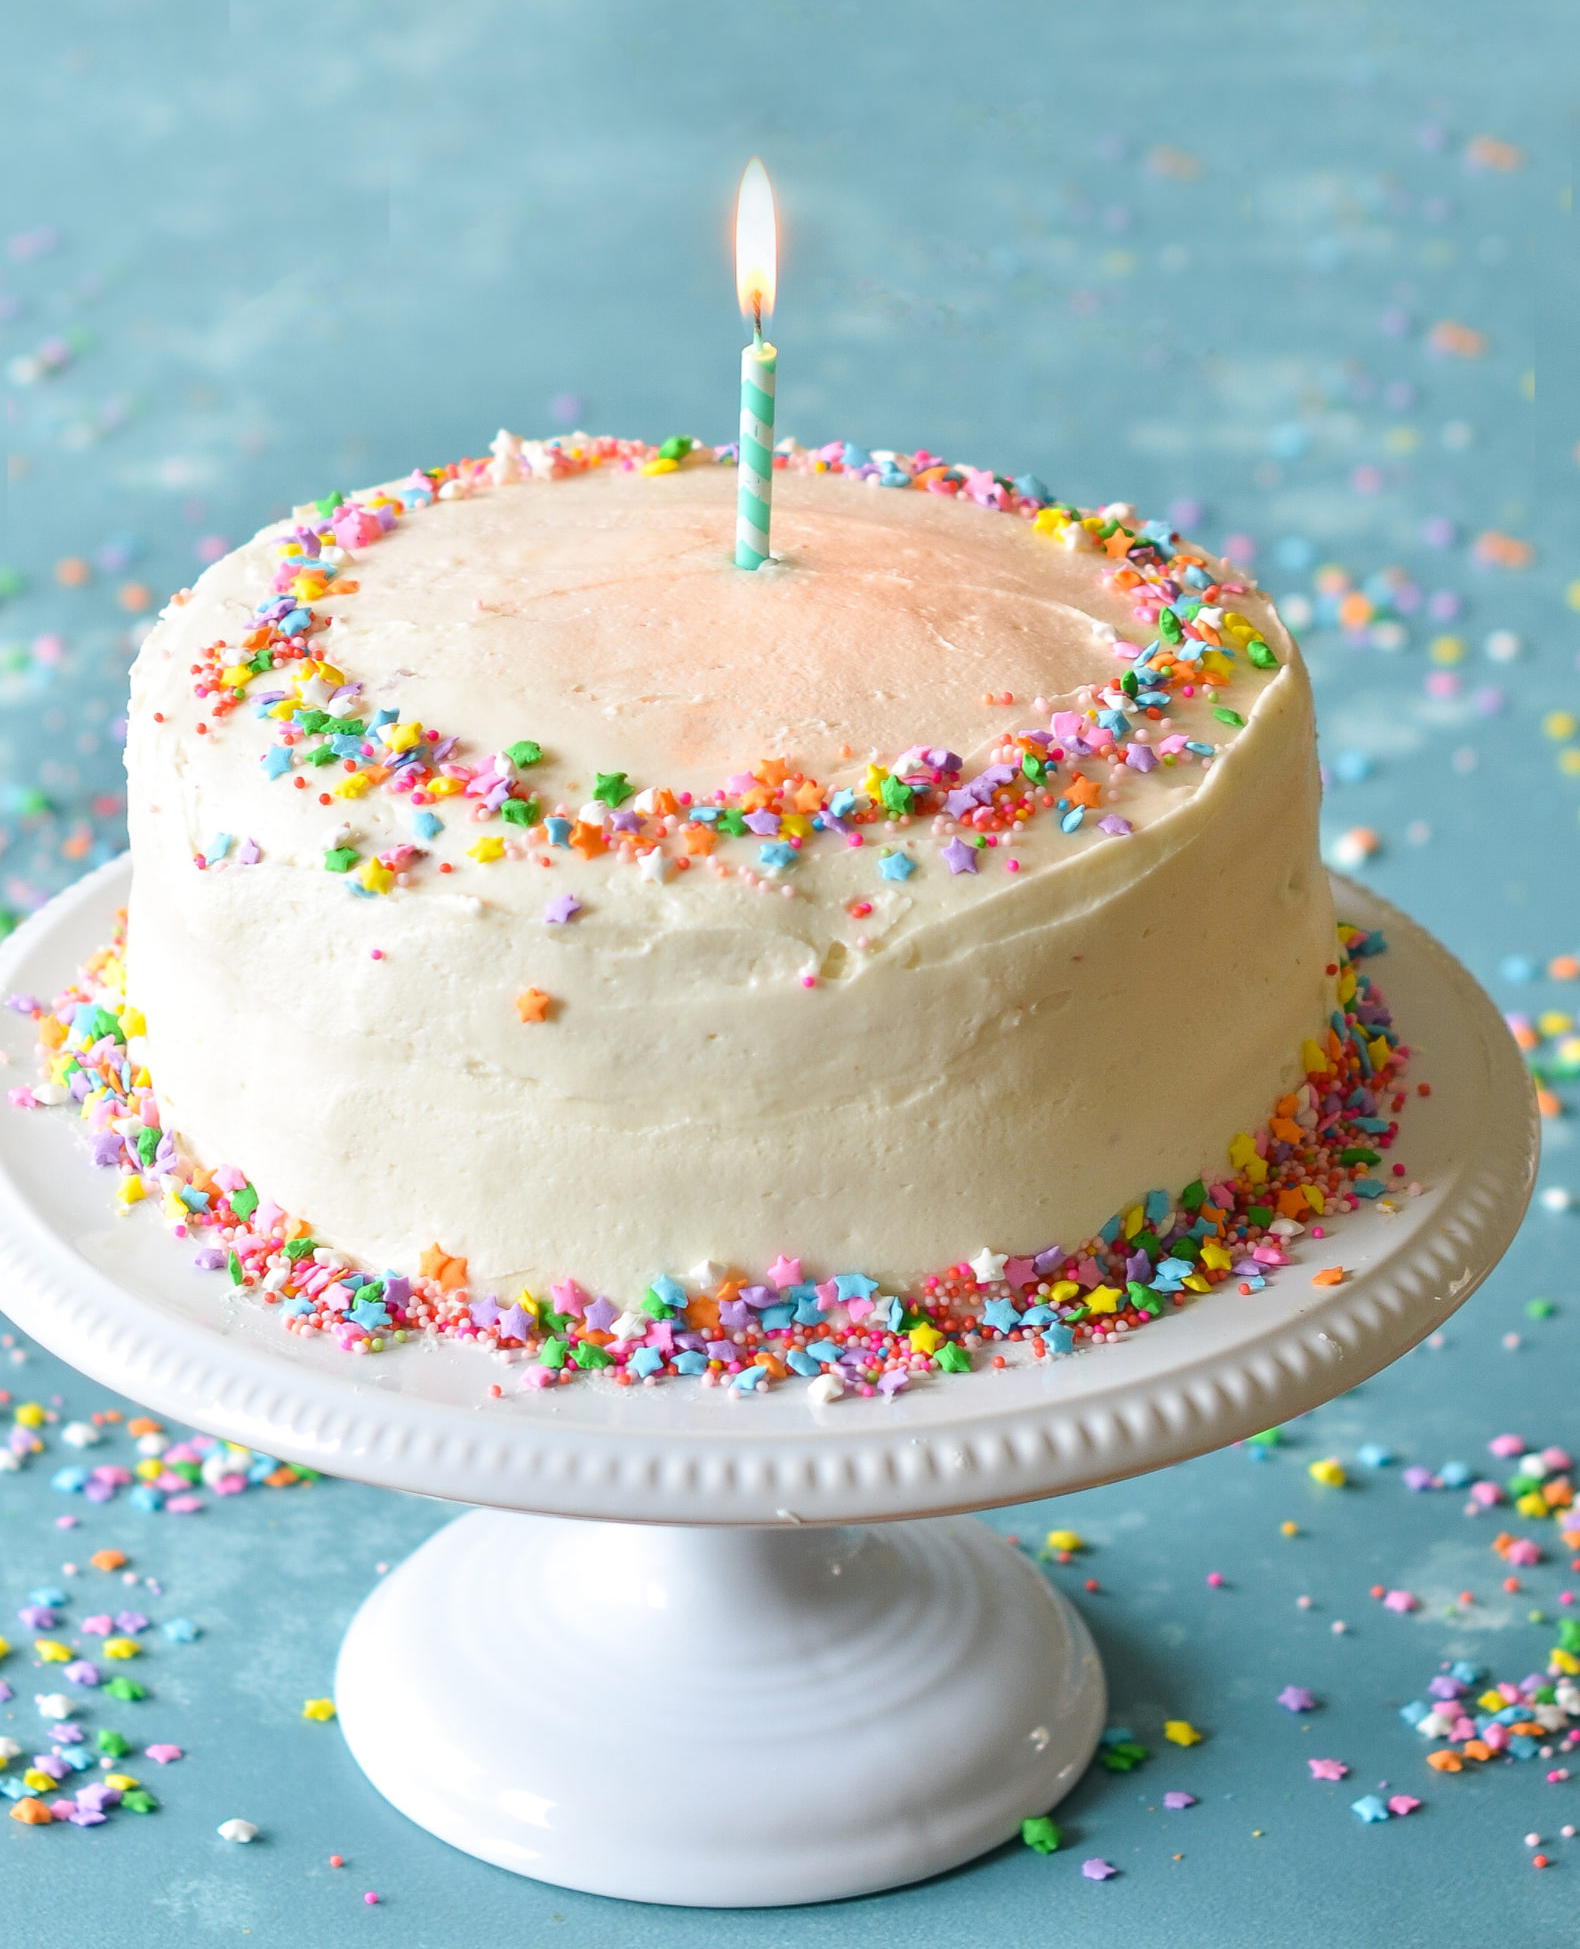 937 Birthday Cake 11 Images, Stock Photos & Vectors | Shutterstock